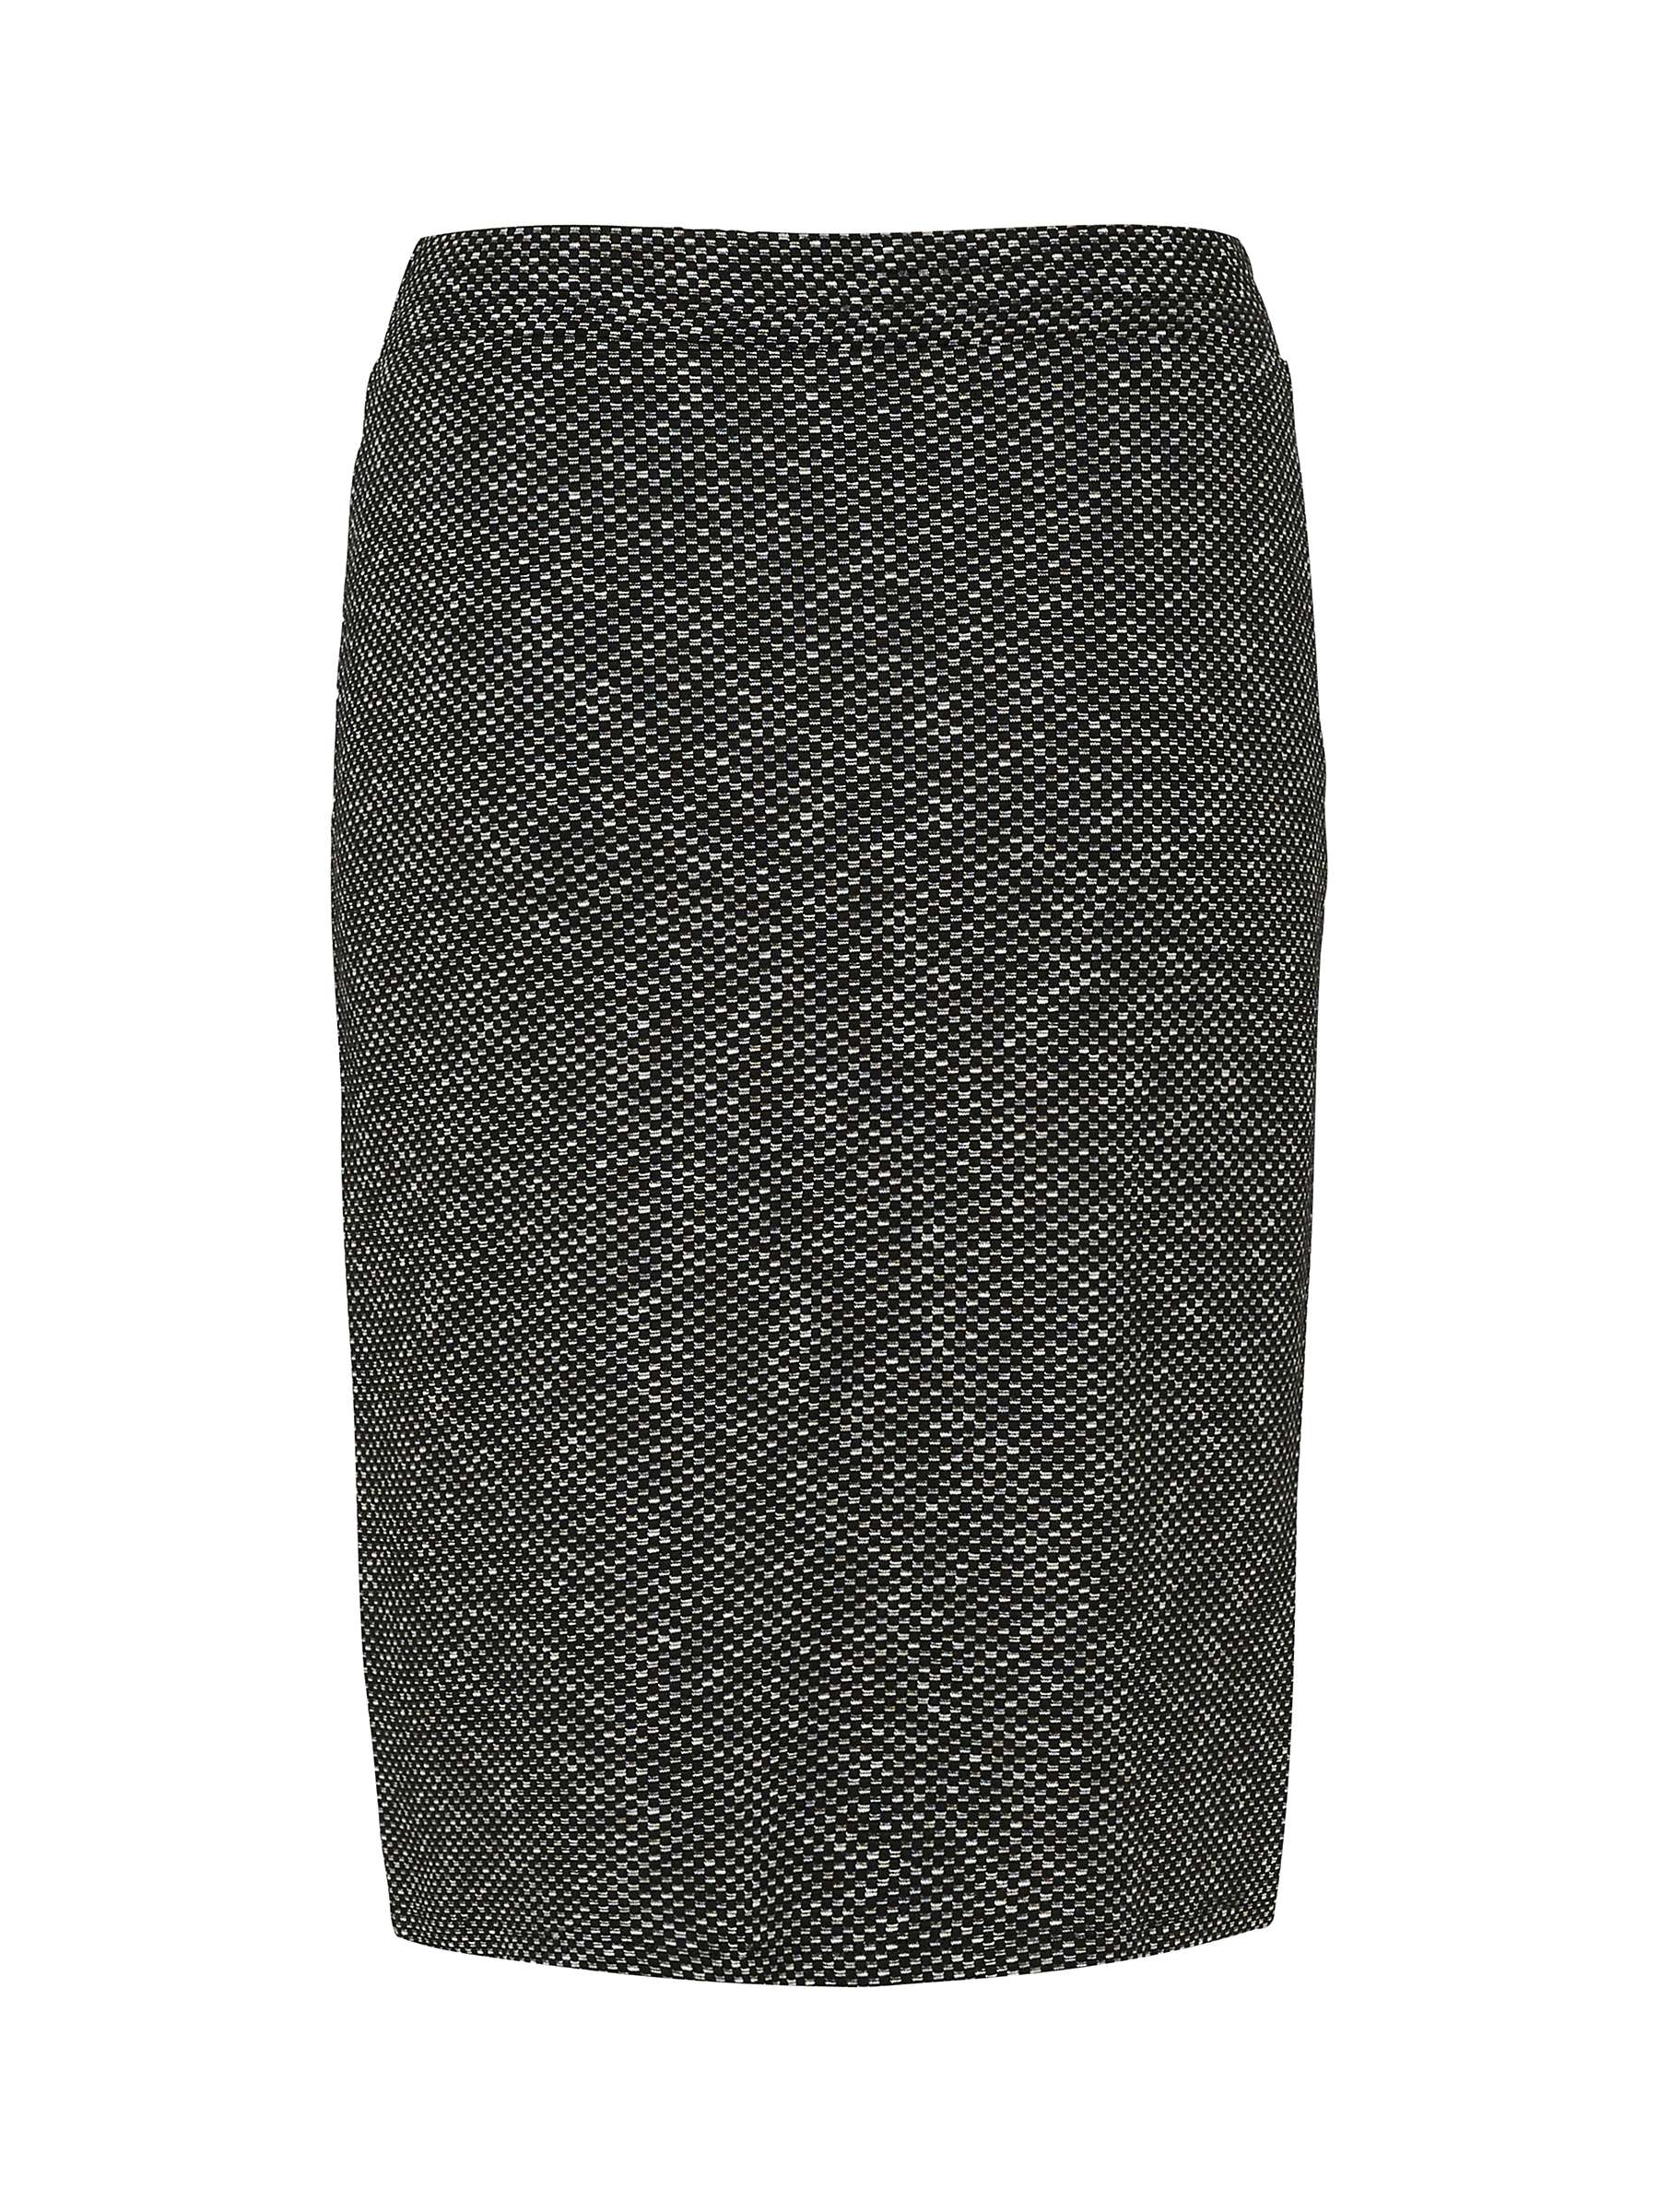 Buy KAFFE Tippie Above Knee Length Pencil Skirt, Black/Chalk Online at johnlewis.com